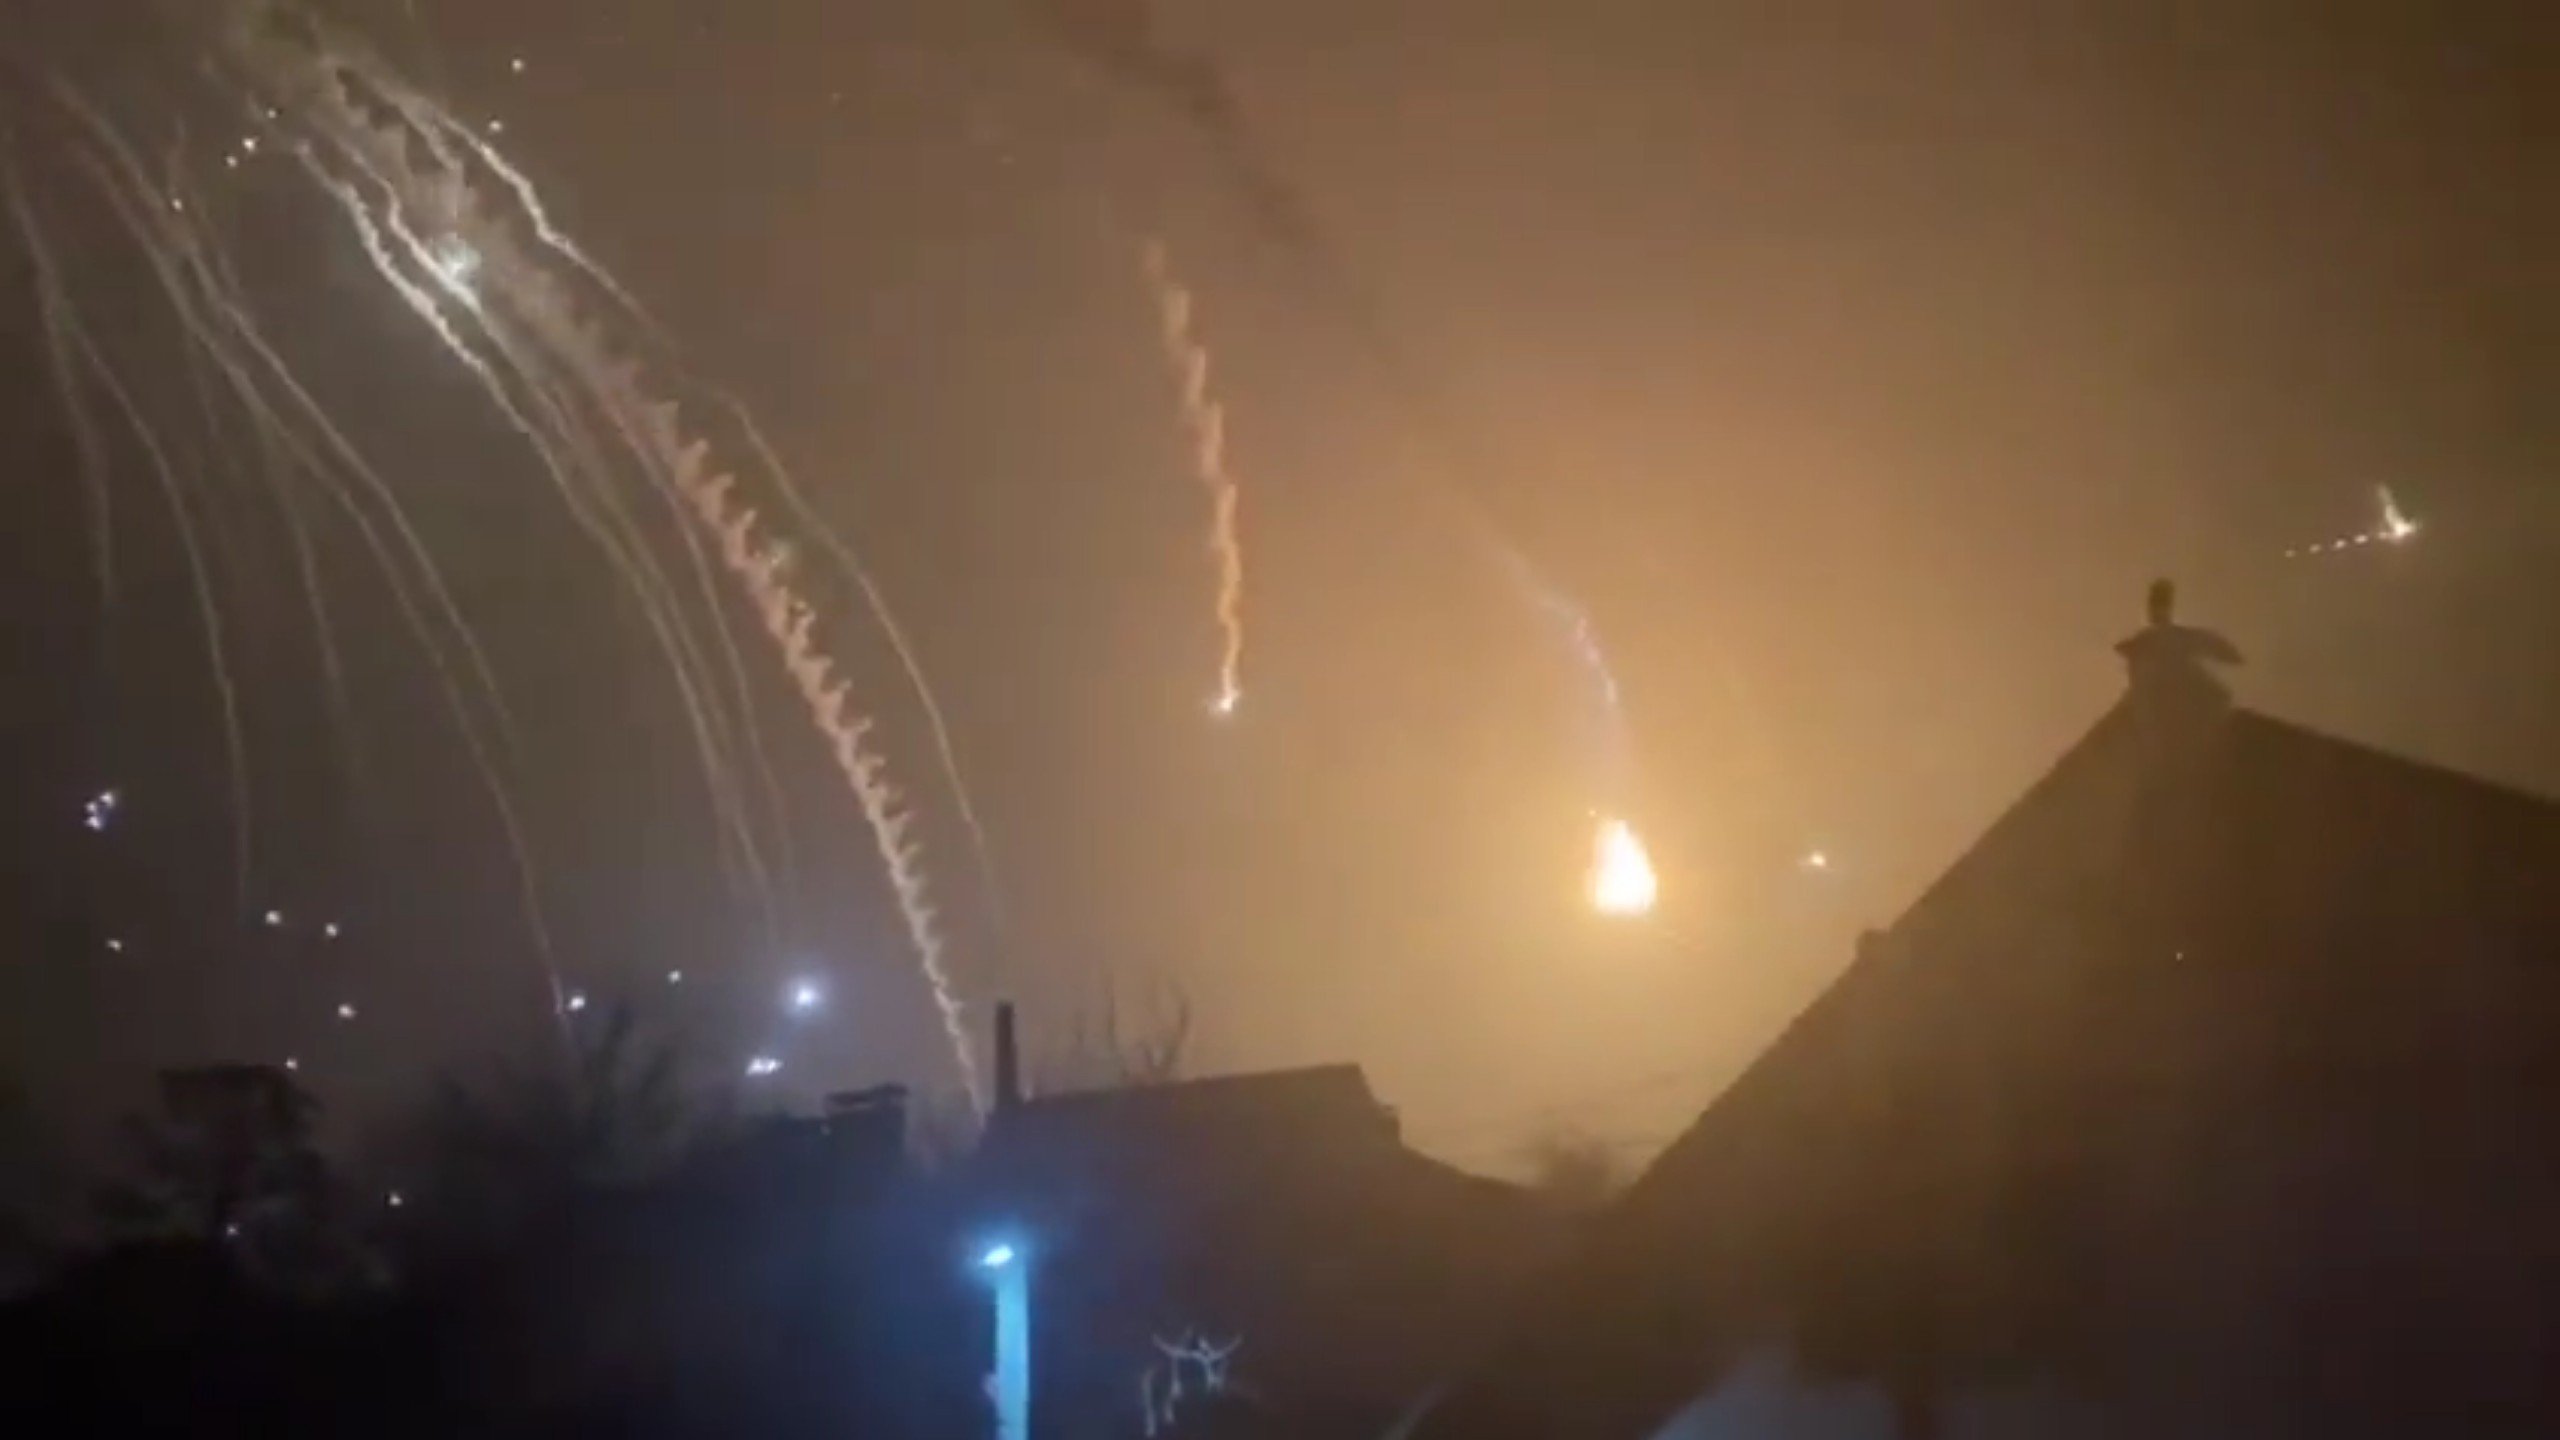 A major explosion over Kyiv